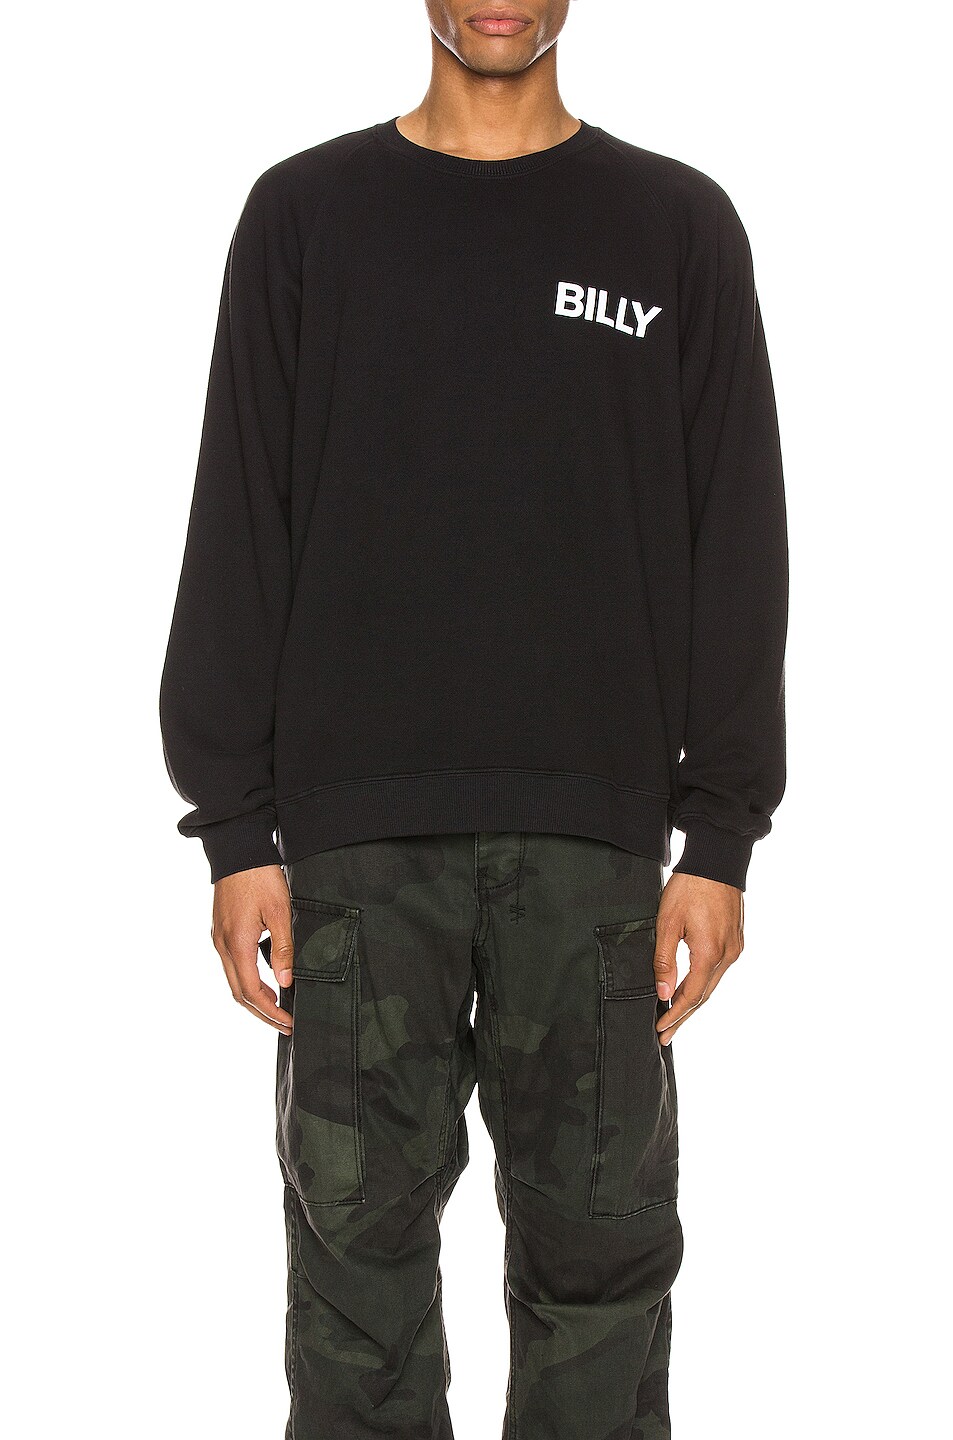 Image 1 of Billy Cloud Crewneck Sweatshirt w/ Billy Logo in Black